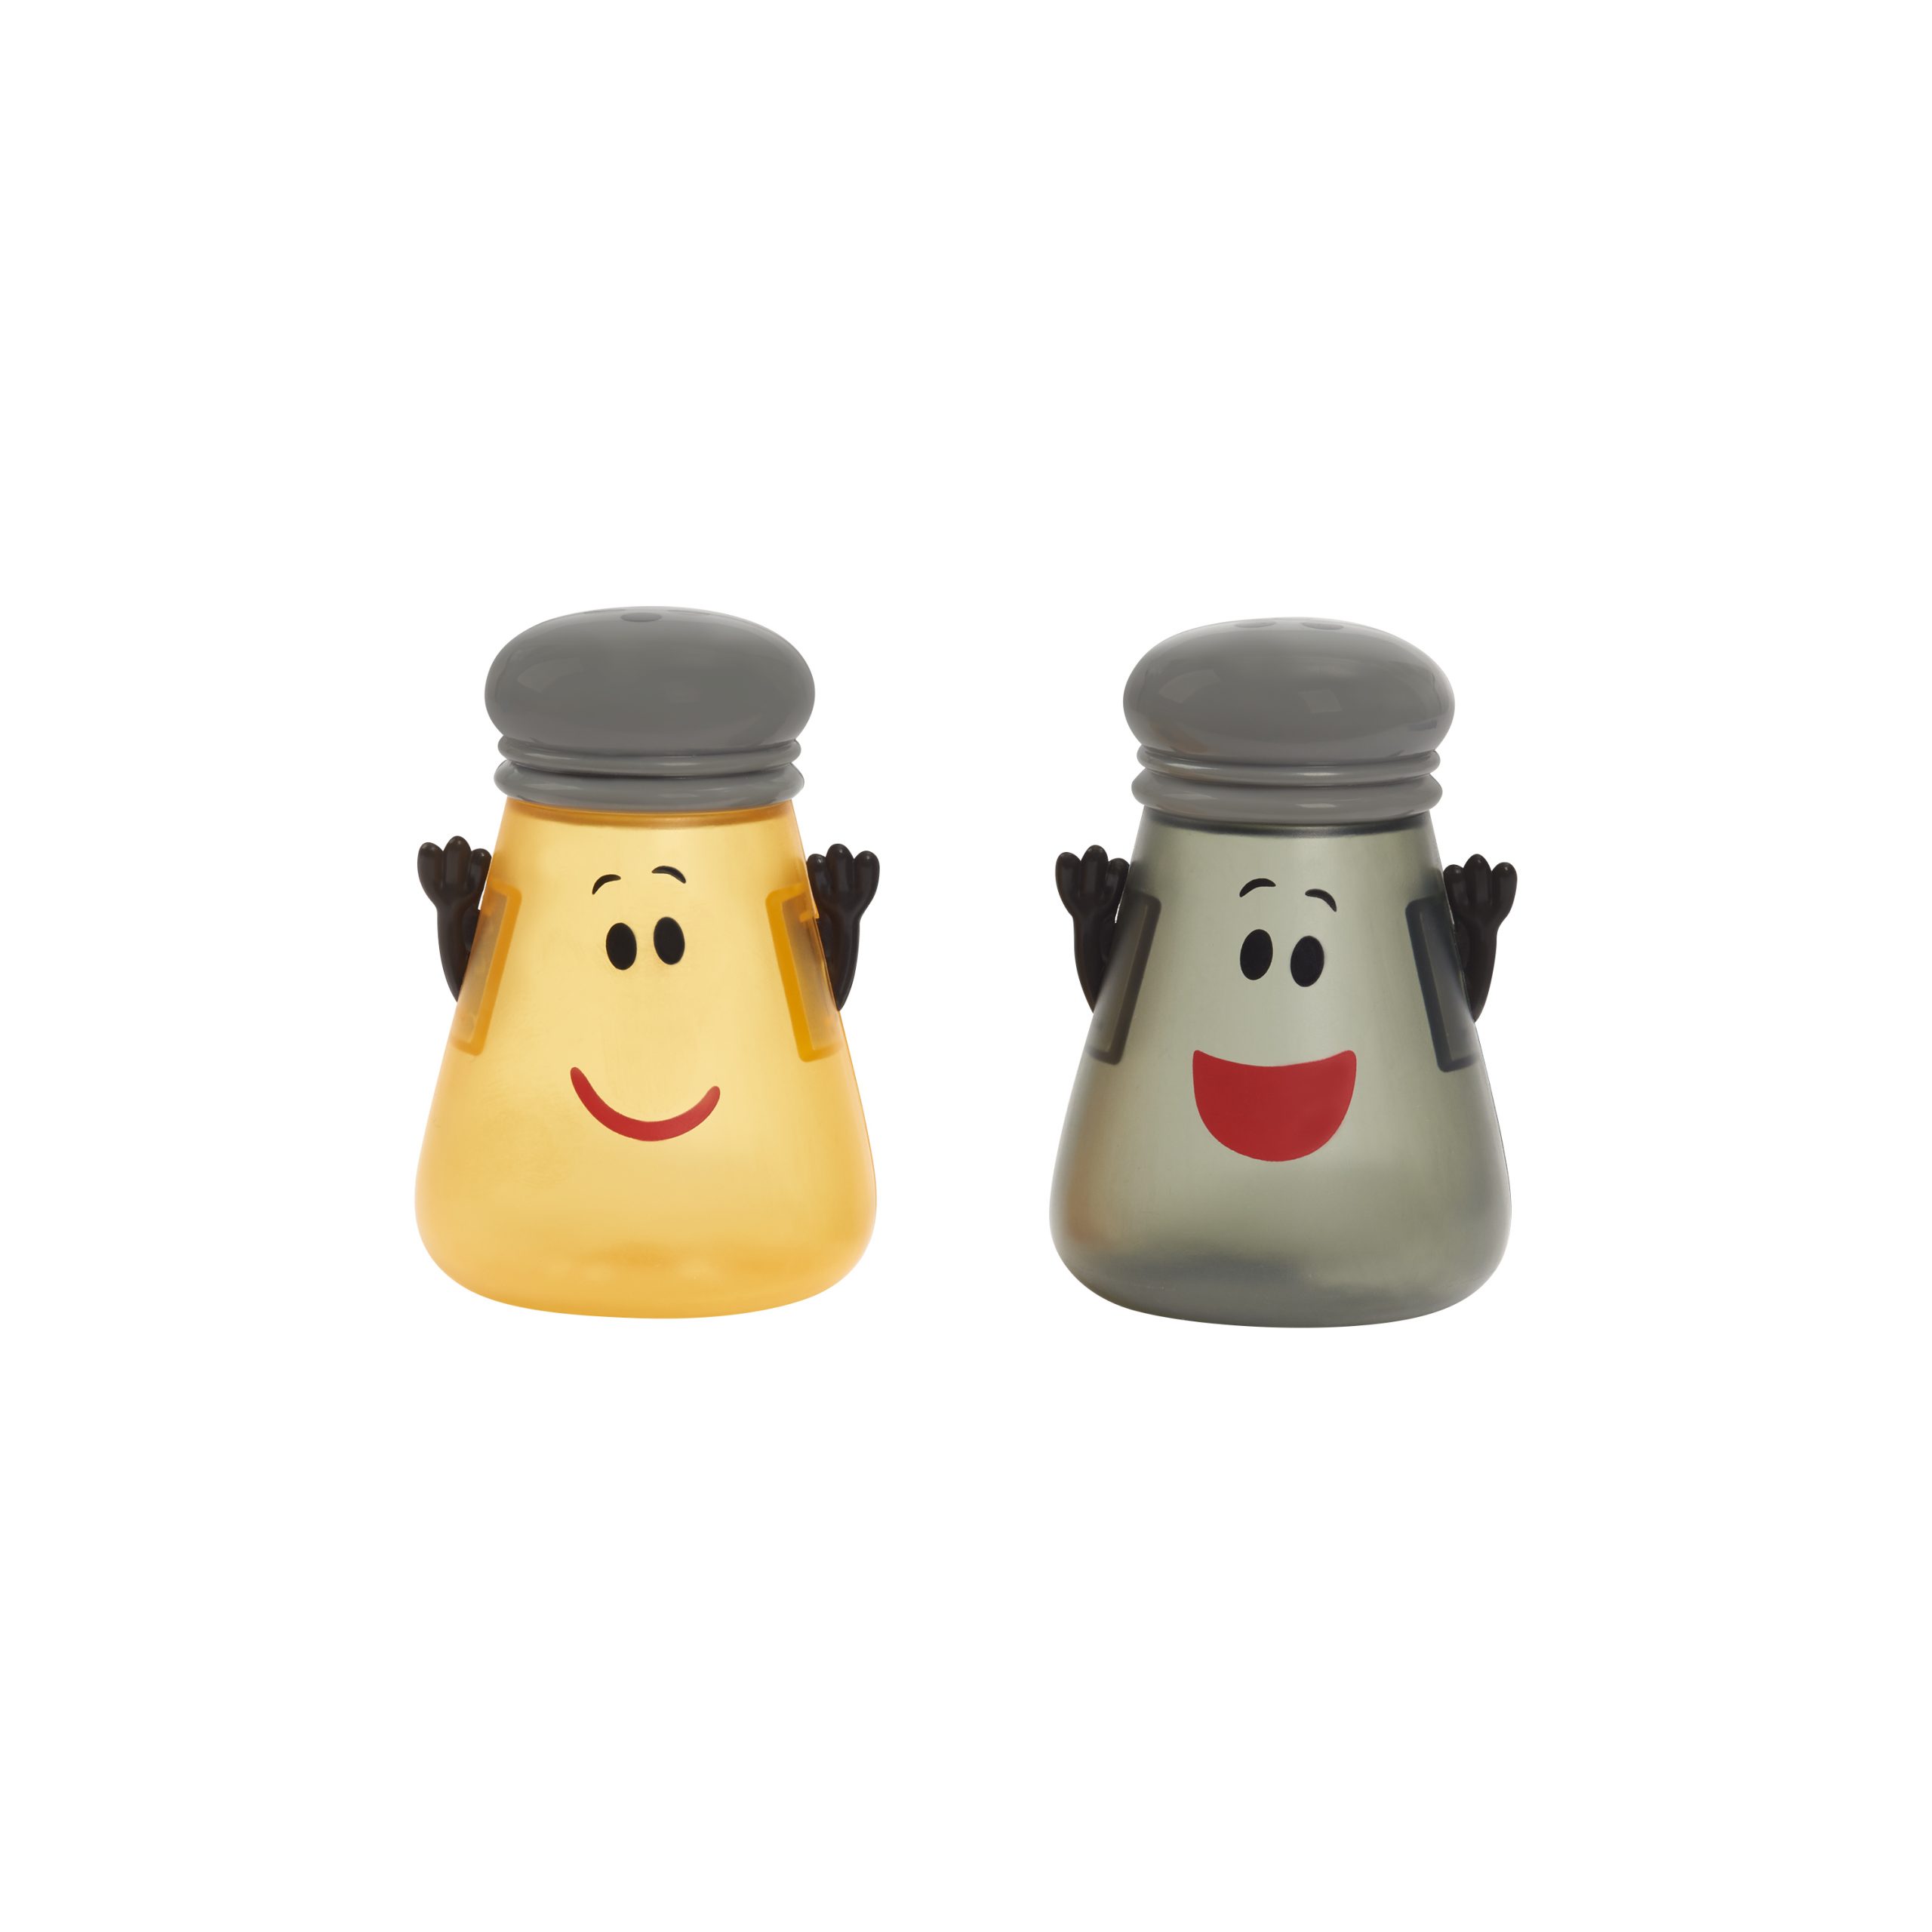 DIY: Mr. Salt and Mrs. Pepper shakers! – Hey, Hey, Heather K